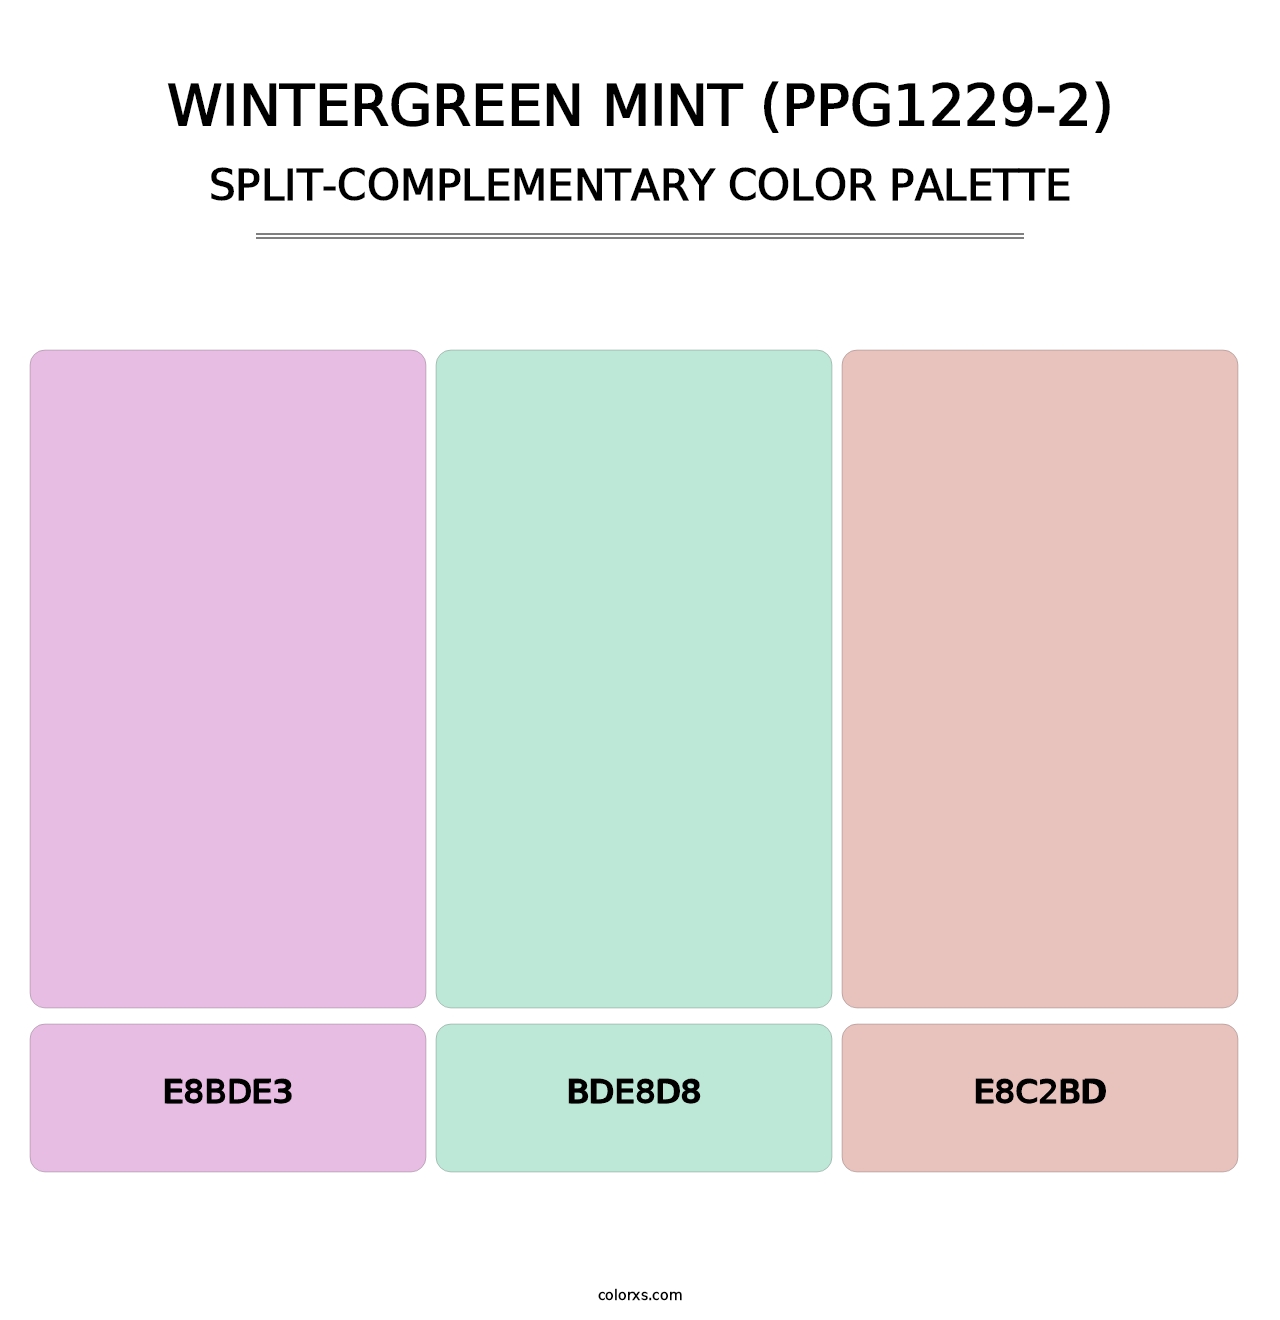 Wintergreen Mint (PPG1229-2) - Split-Complementary Color Palette